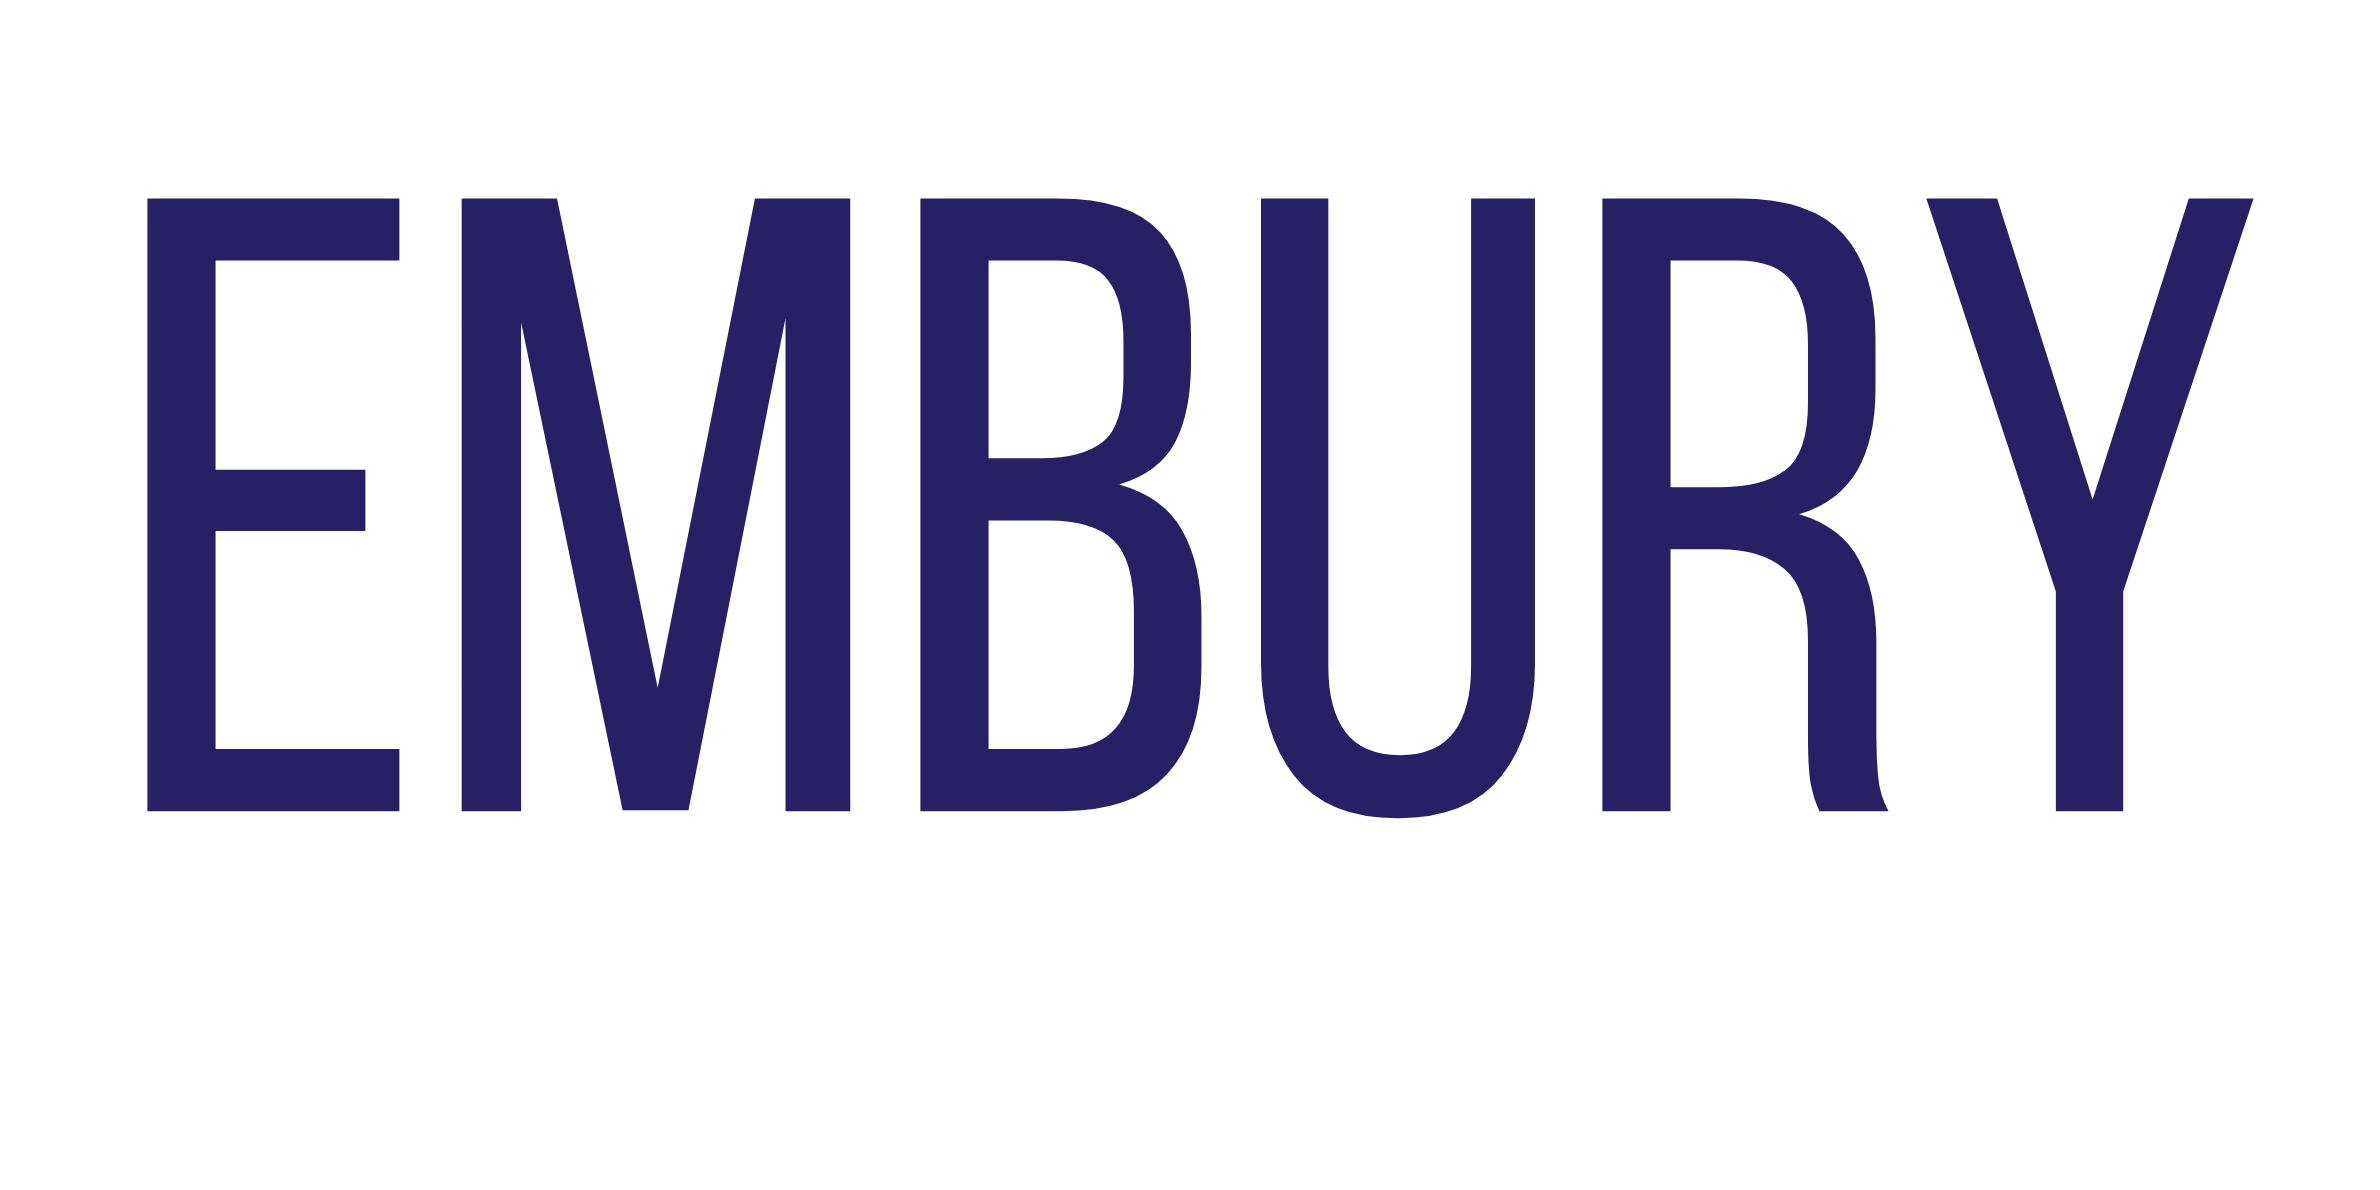 Embury ltd. logo